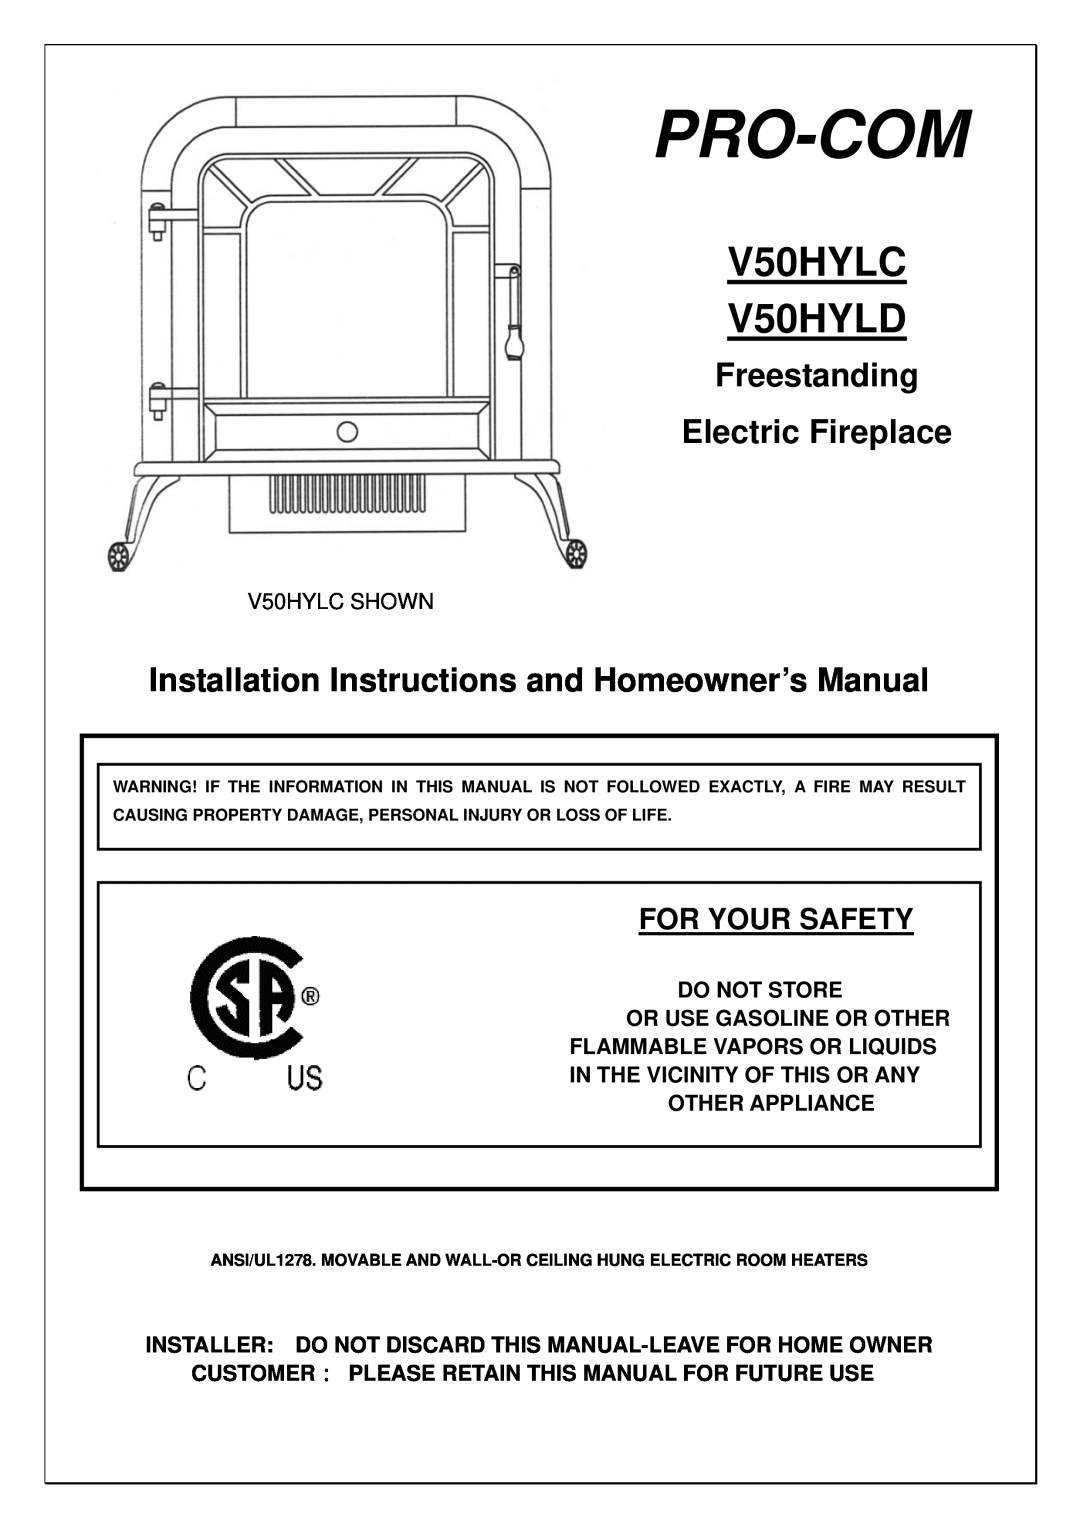 Procom installation instructions V50HYLC V50HYLD, Pro-Com, Freestanding Electric Fireplace, For Your Safety 